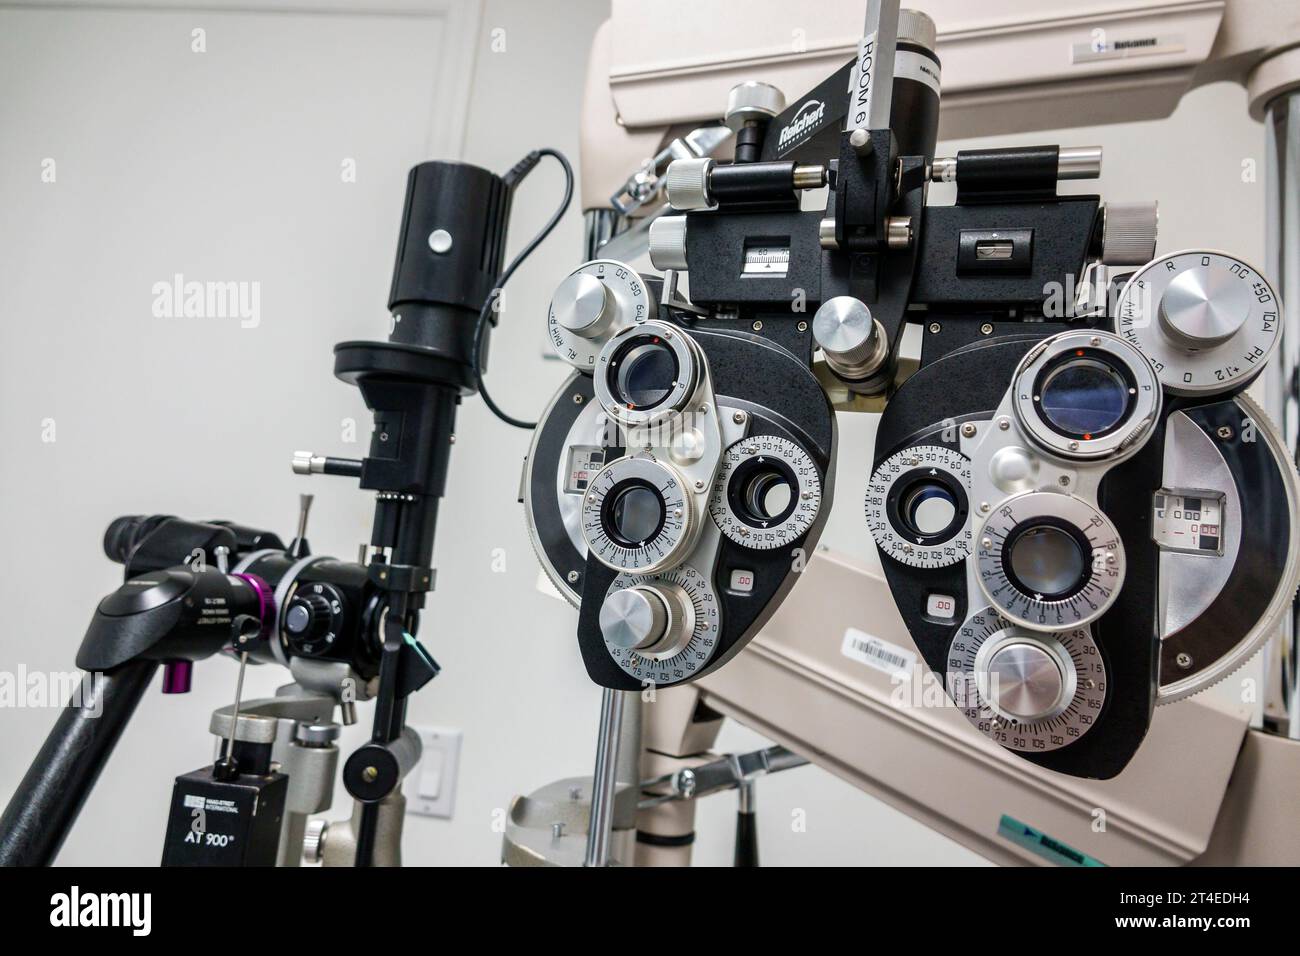 North Miami Beach Florida,university school of optometry,equipment phoropter measures refraction,vision eyesight Stock Photo